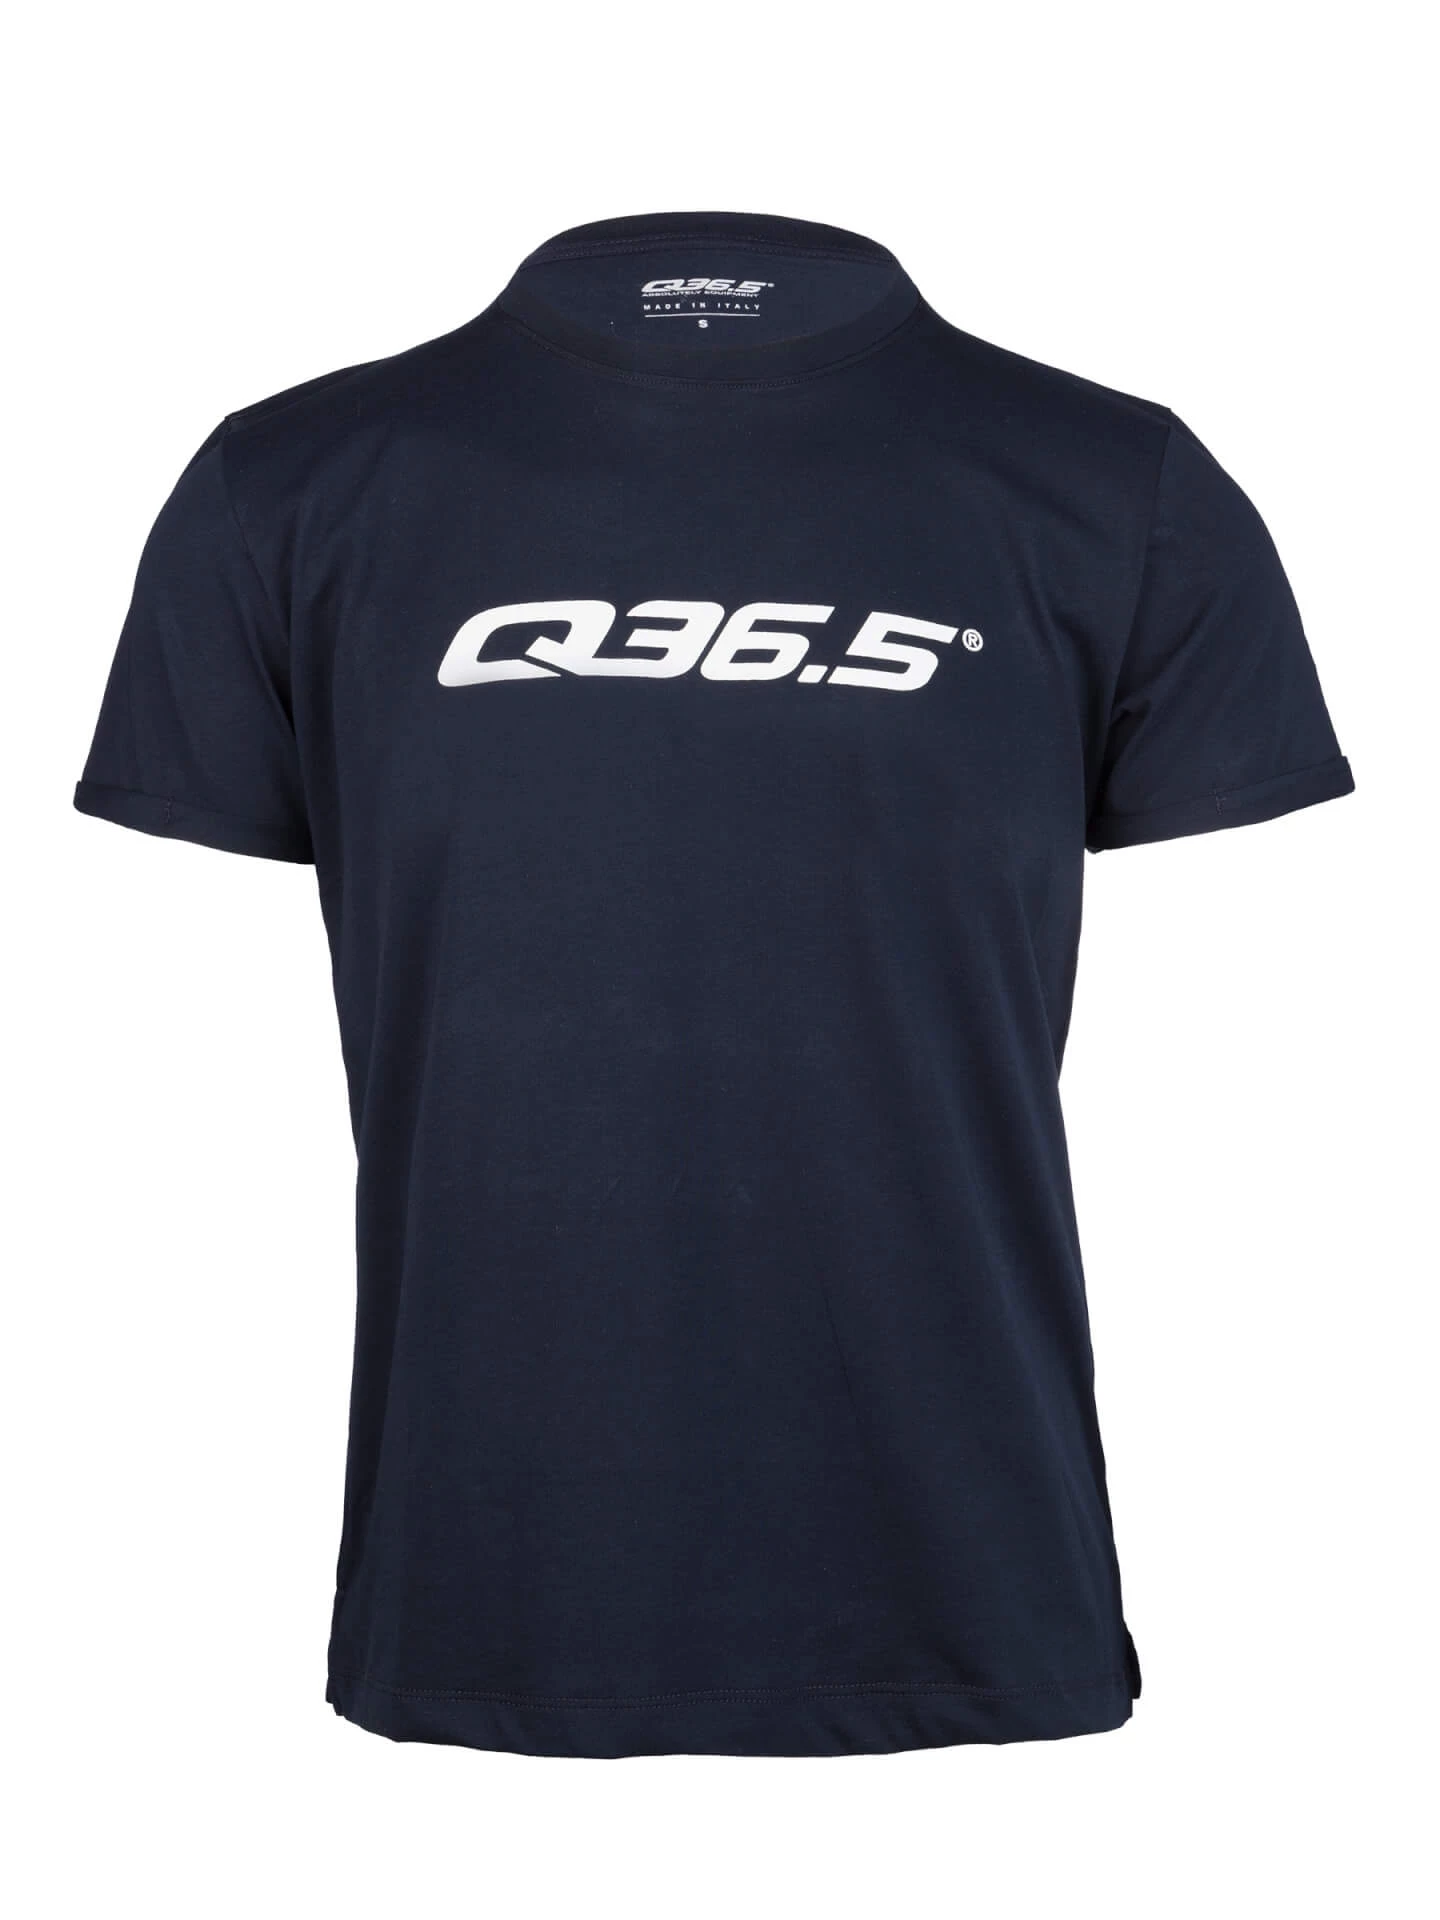 mens-logo-t-shirt-blue-navy-500.9